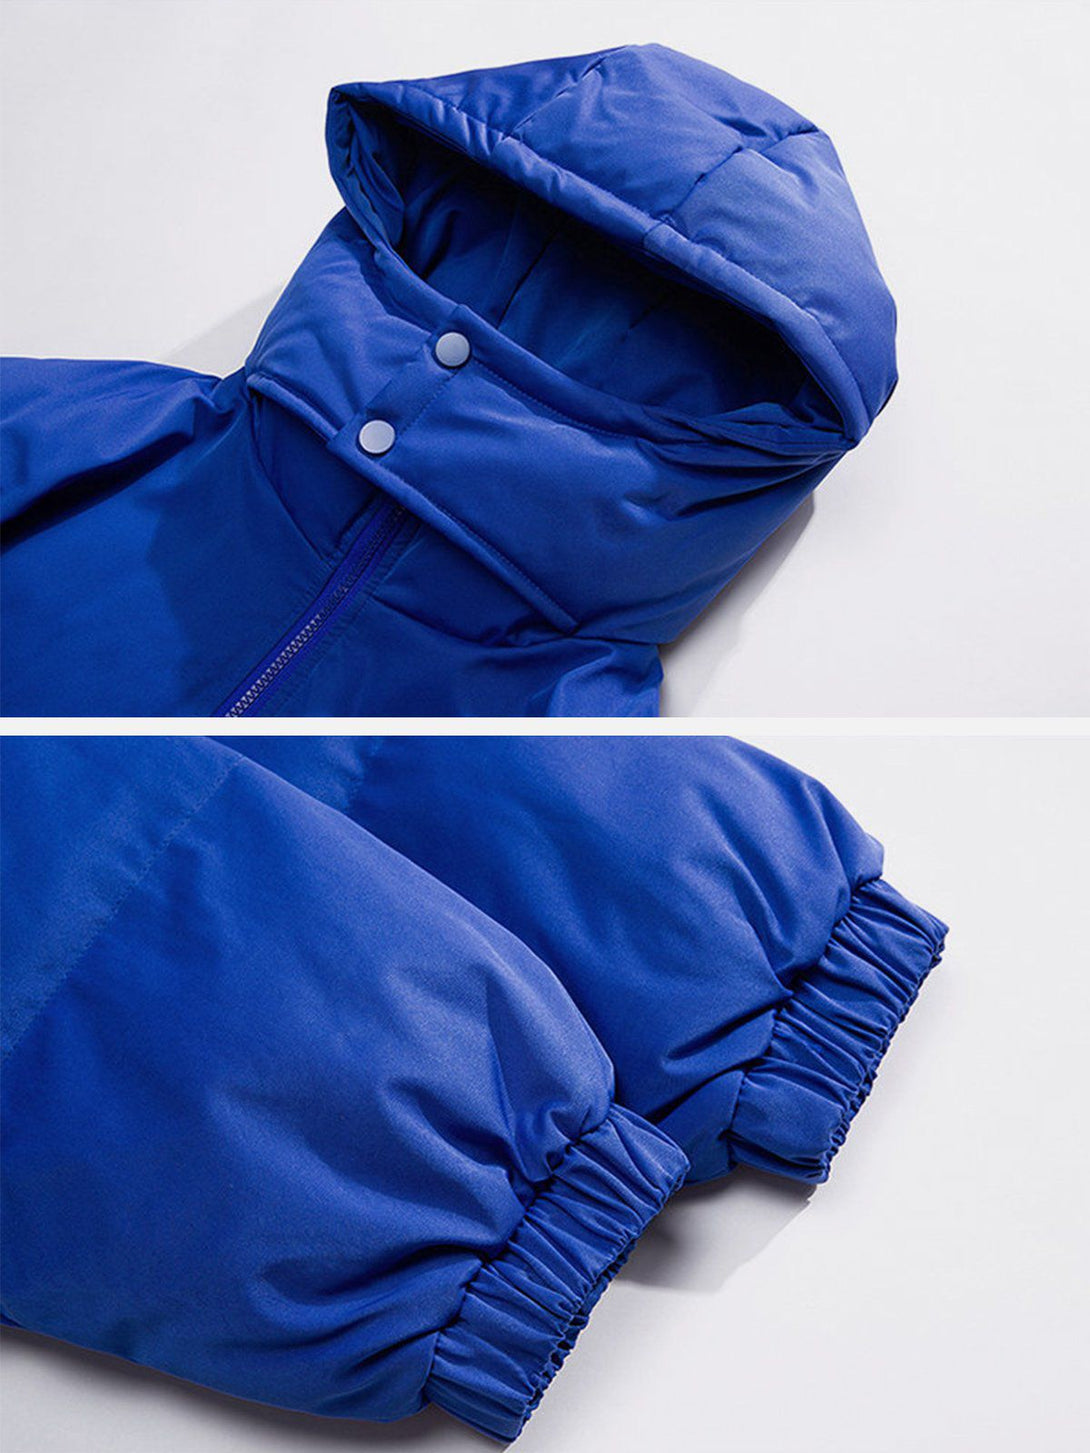 Majesda® - Star Letter Print Winter Coat outfit ideas streetwear fashion